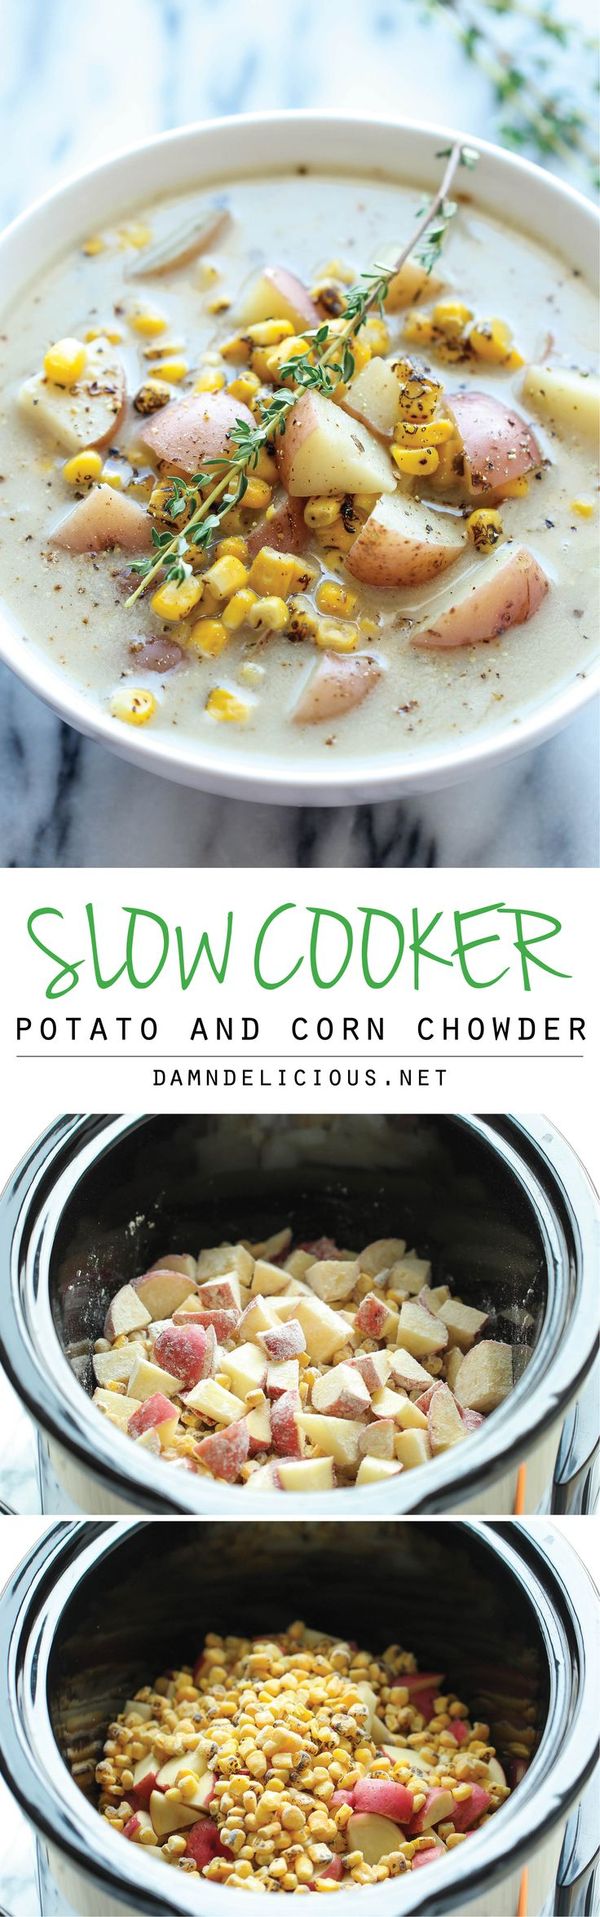 Slow Cooker Potato and Corn Chowder